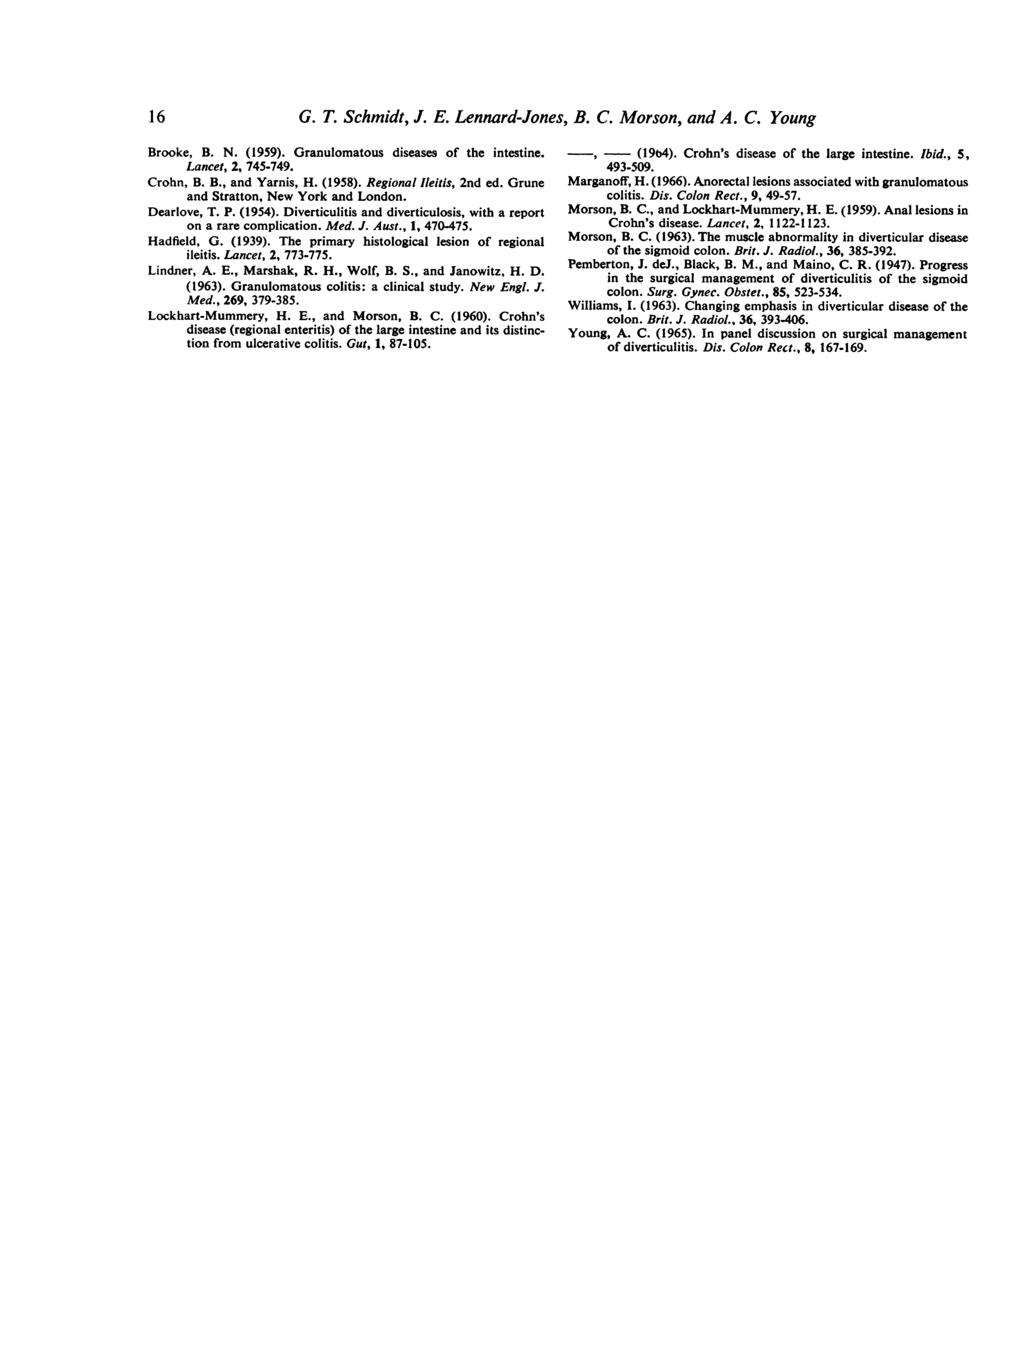 16 G. T. Schmidt, J. E. Lennard-Jones, B. C. Morson, and A. C. Young Brooke, B. N. (1959). Granulomatous diseases of the intestine. Lancet, 2, 745-749. Crohn, B. B., and Yarnis, H. (1958).